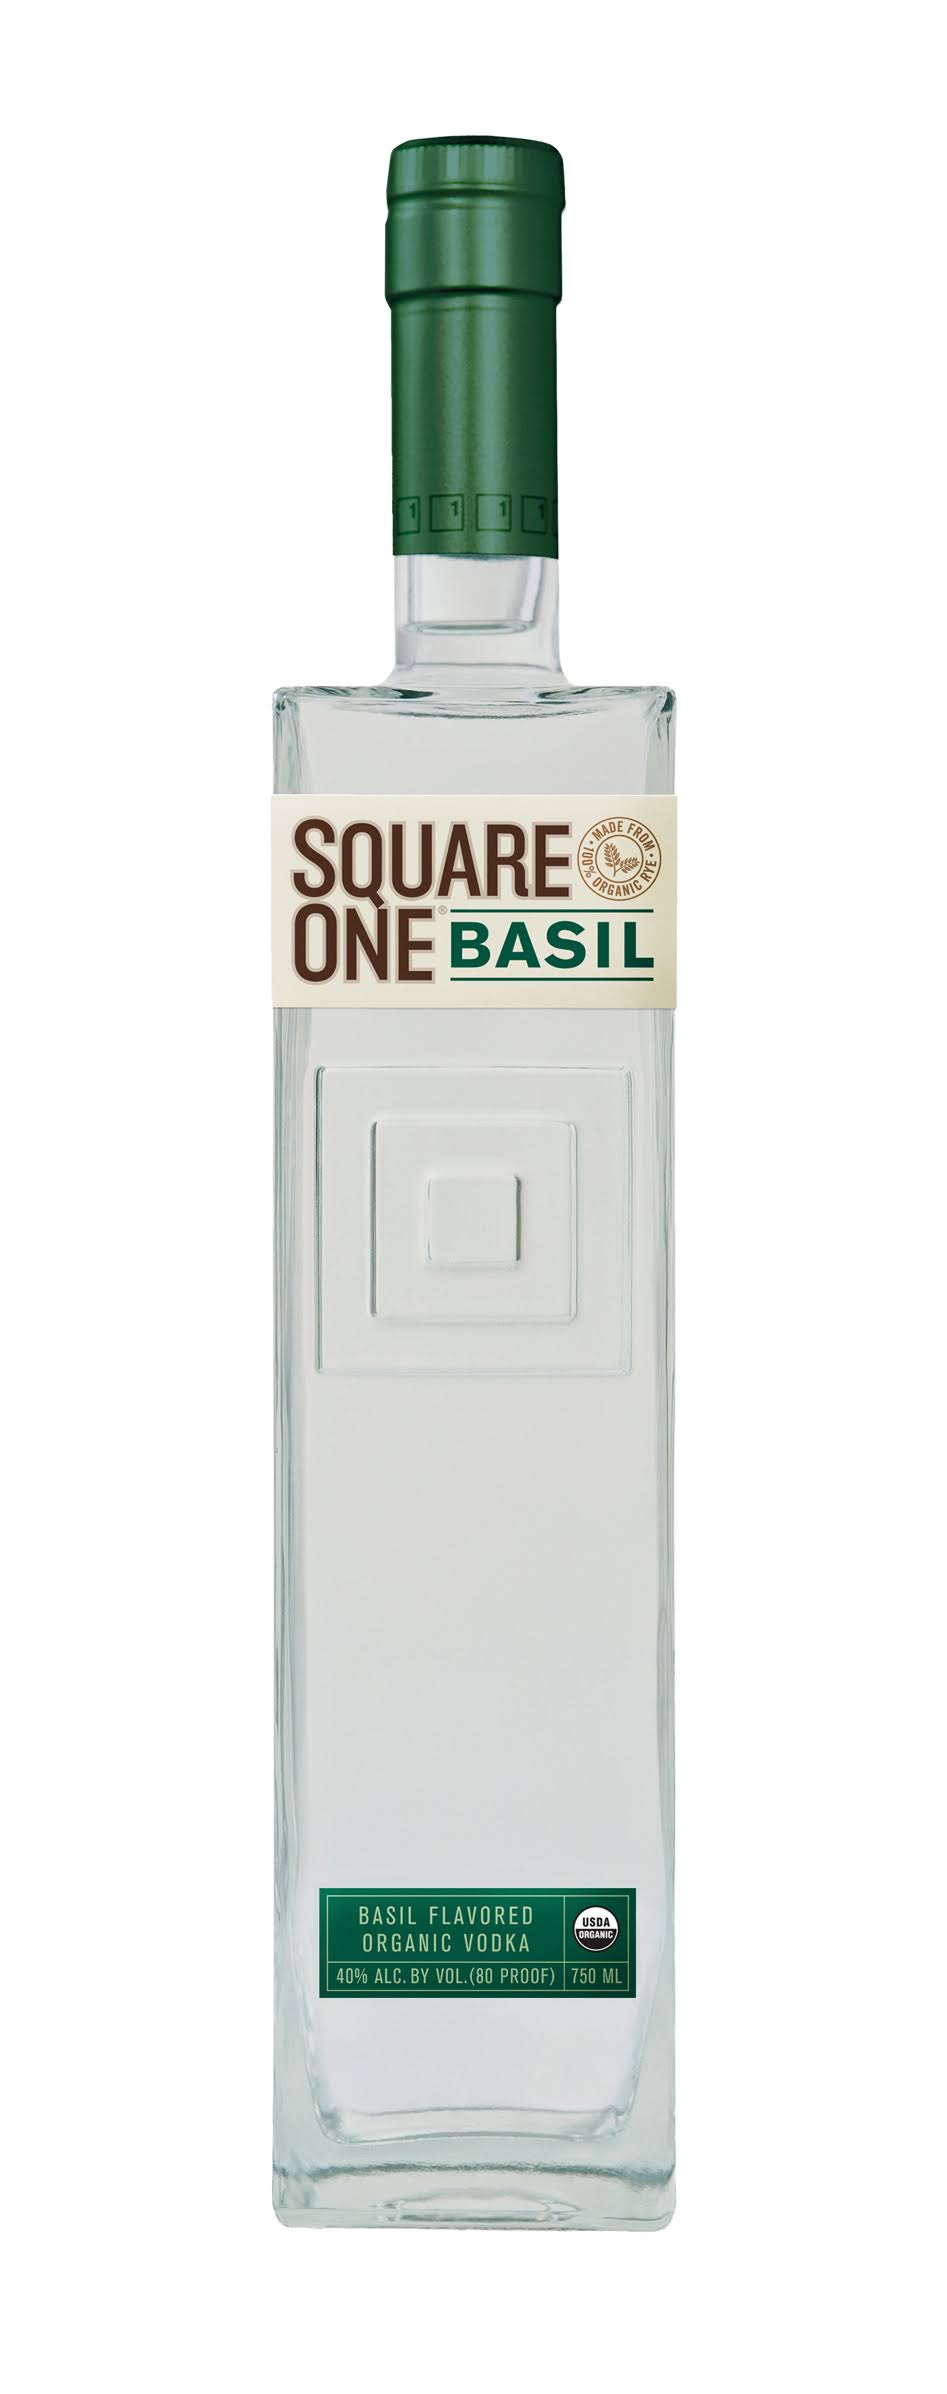 Square One Basil Vodka - 750 ml bottle